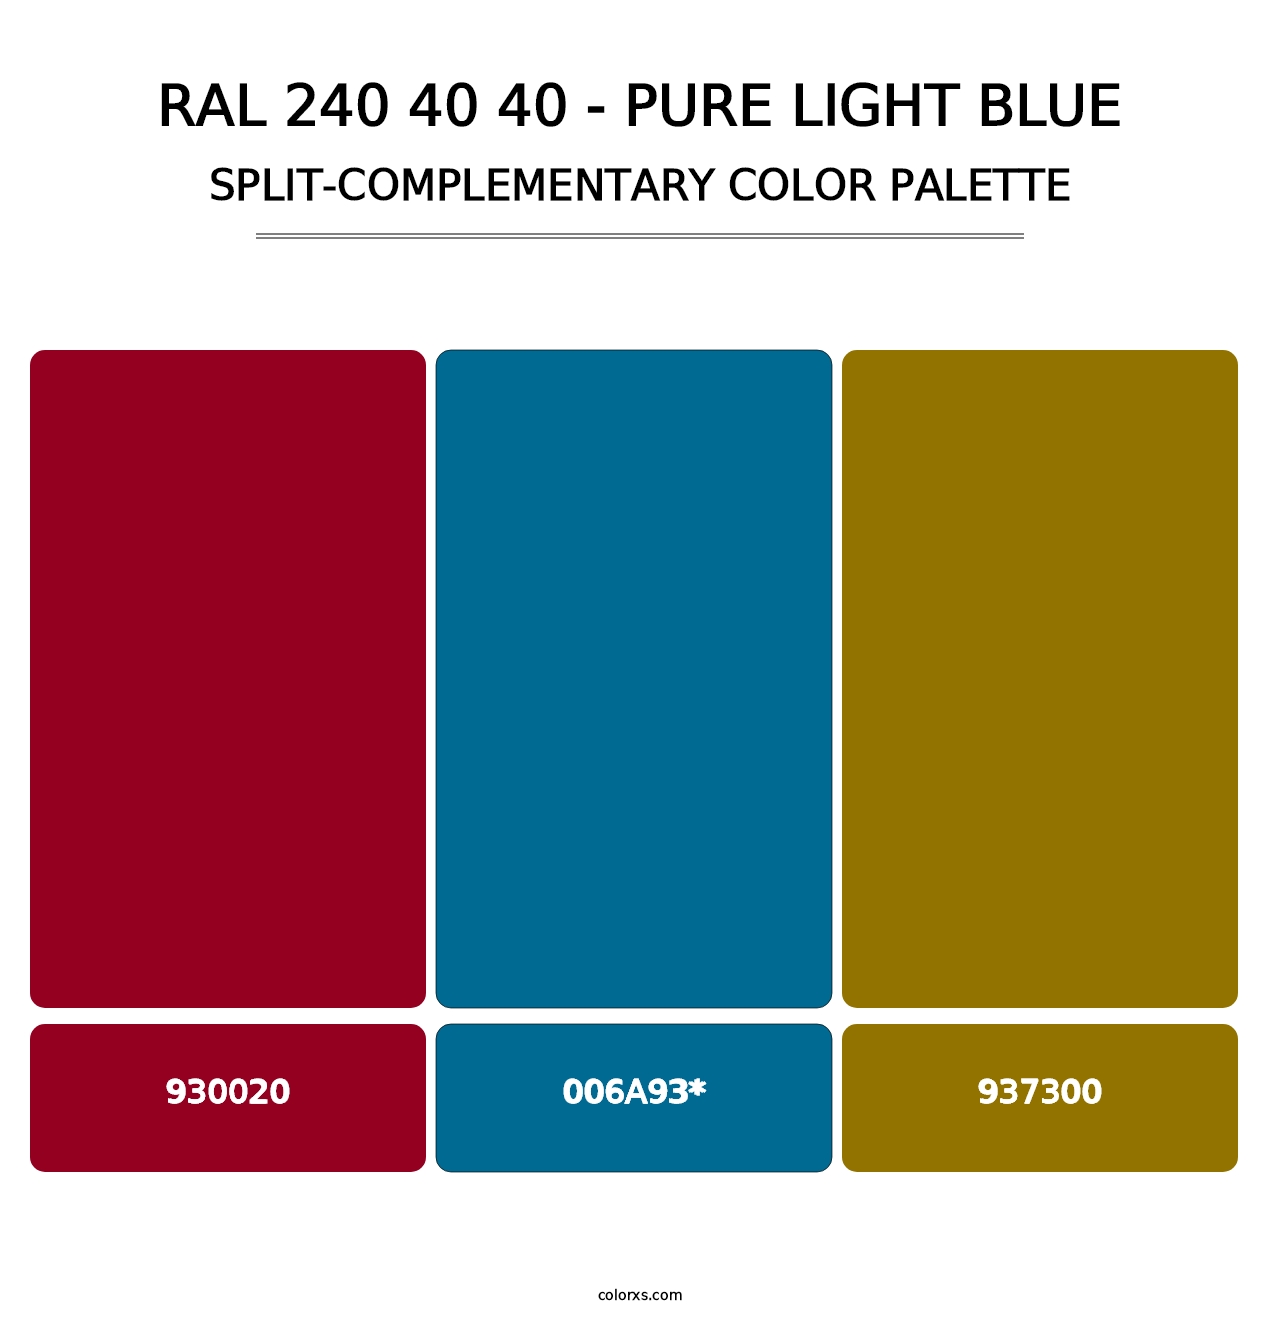 RAL 240 40 40 - Pure Light Blue - Split-Complementary Color Palette